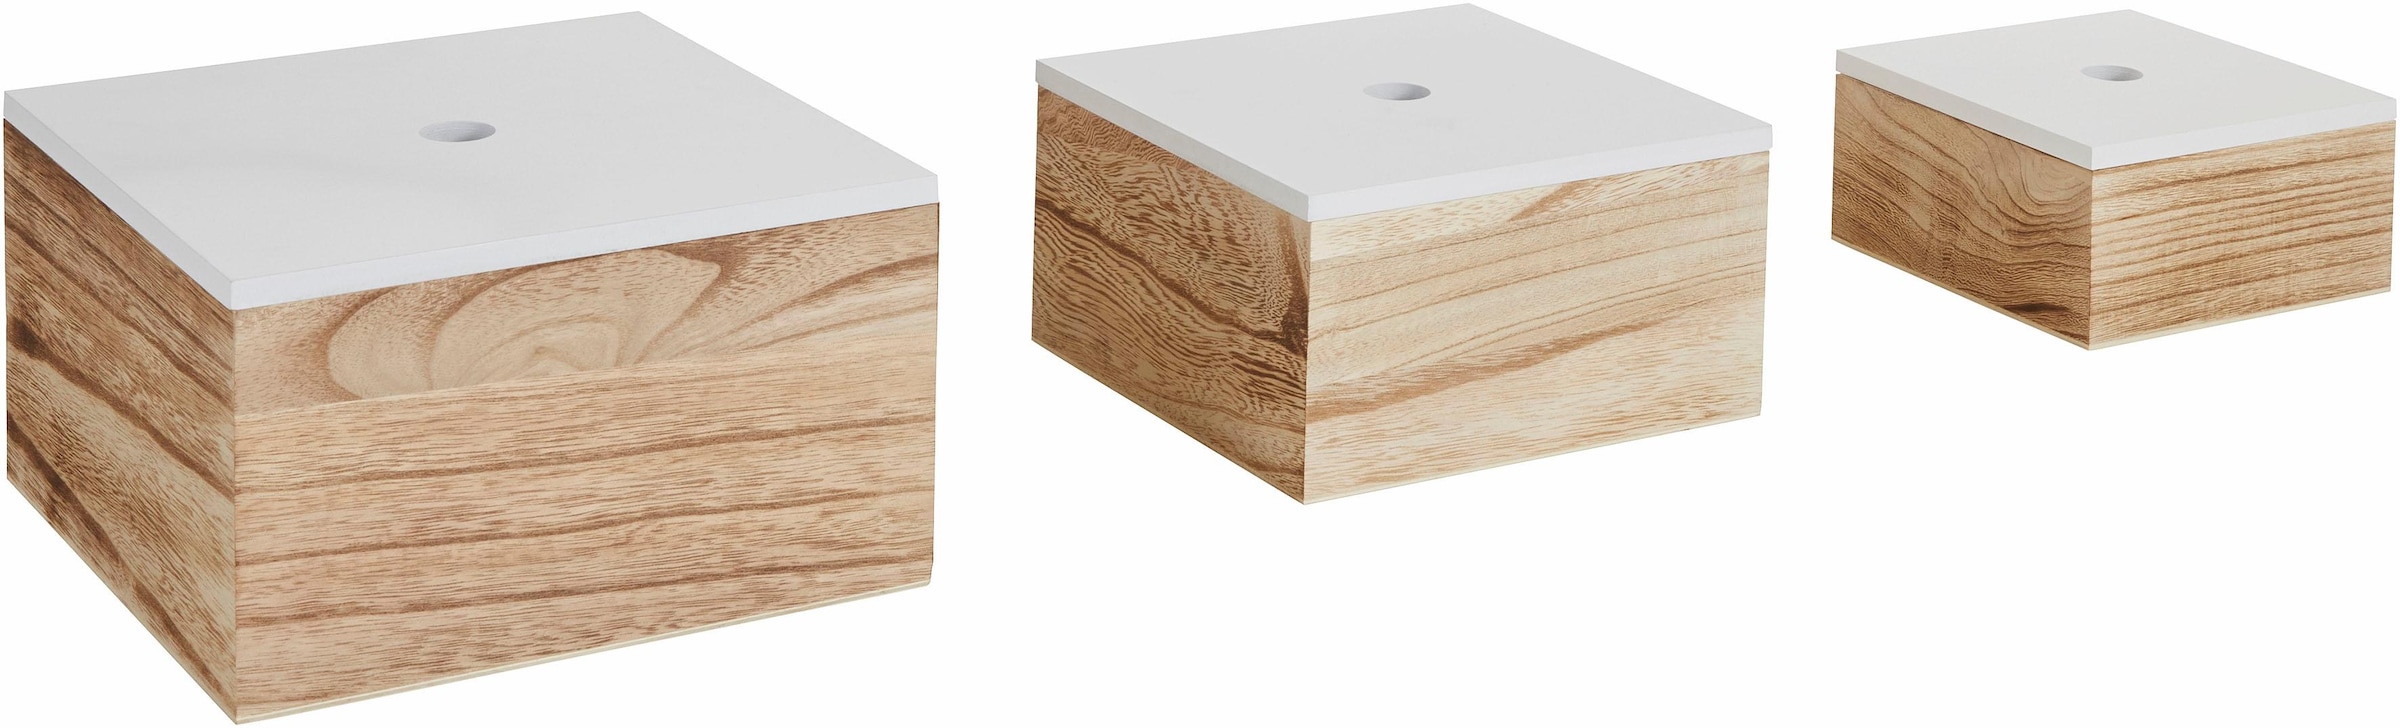 Aufbewahrungsbox, 3er Set, Holz, weiß/natur